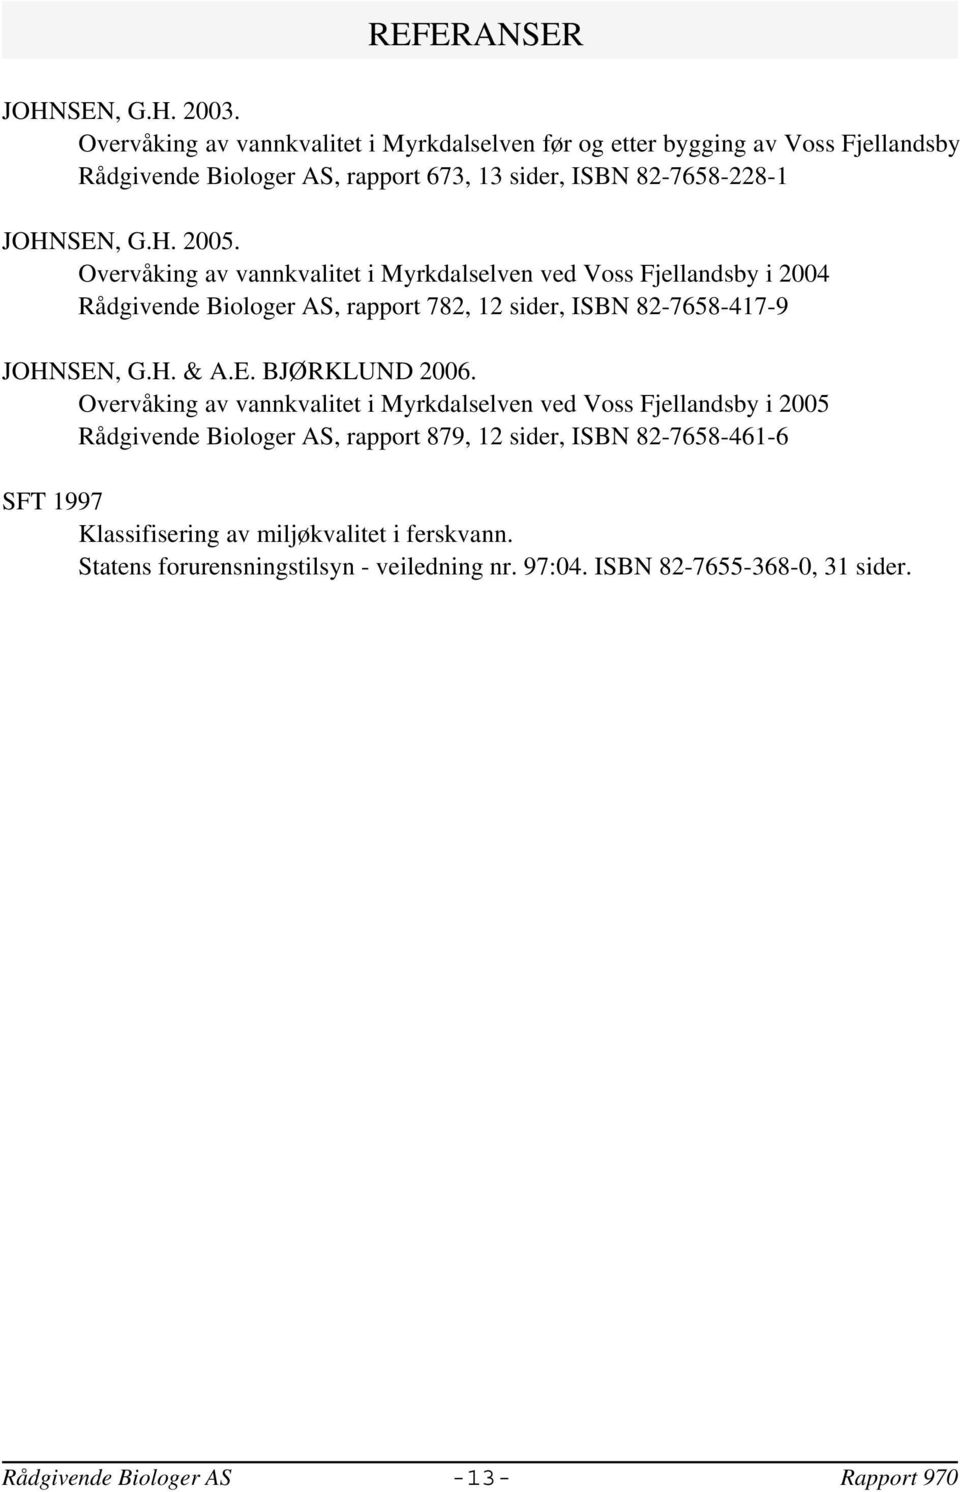 Overvåking av vannkvalitet i Myrkdalselven ved Voss Fjellandsby i 24 Rådgivende Biologer AS, rapport 782, 12 sider, ISBN 82-7658-417-9 JOHNSEN, G.H. & A.E. BJØRKLUND 26.